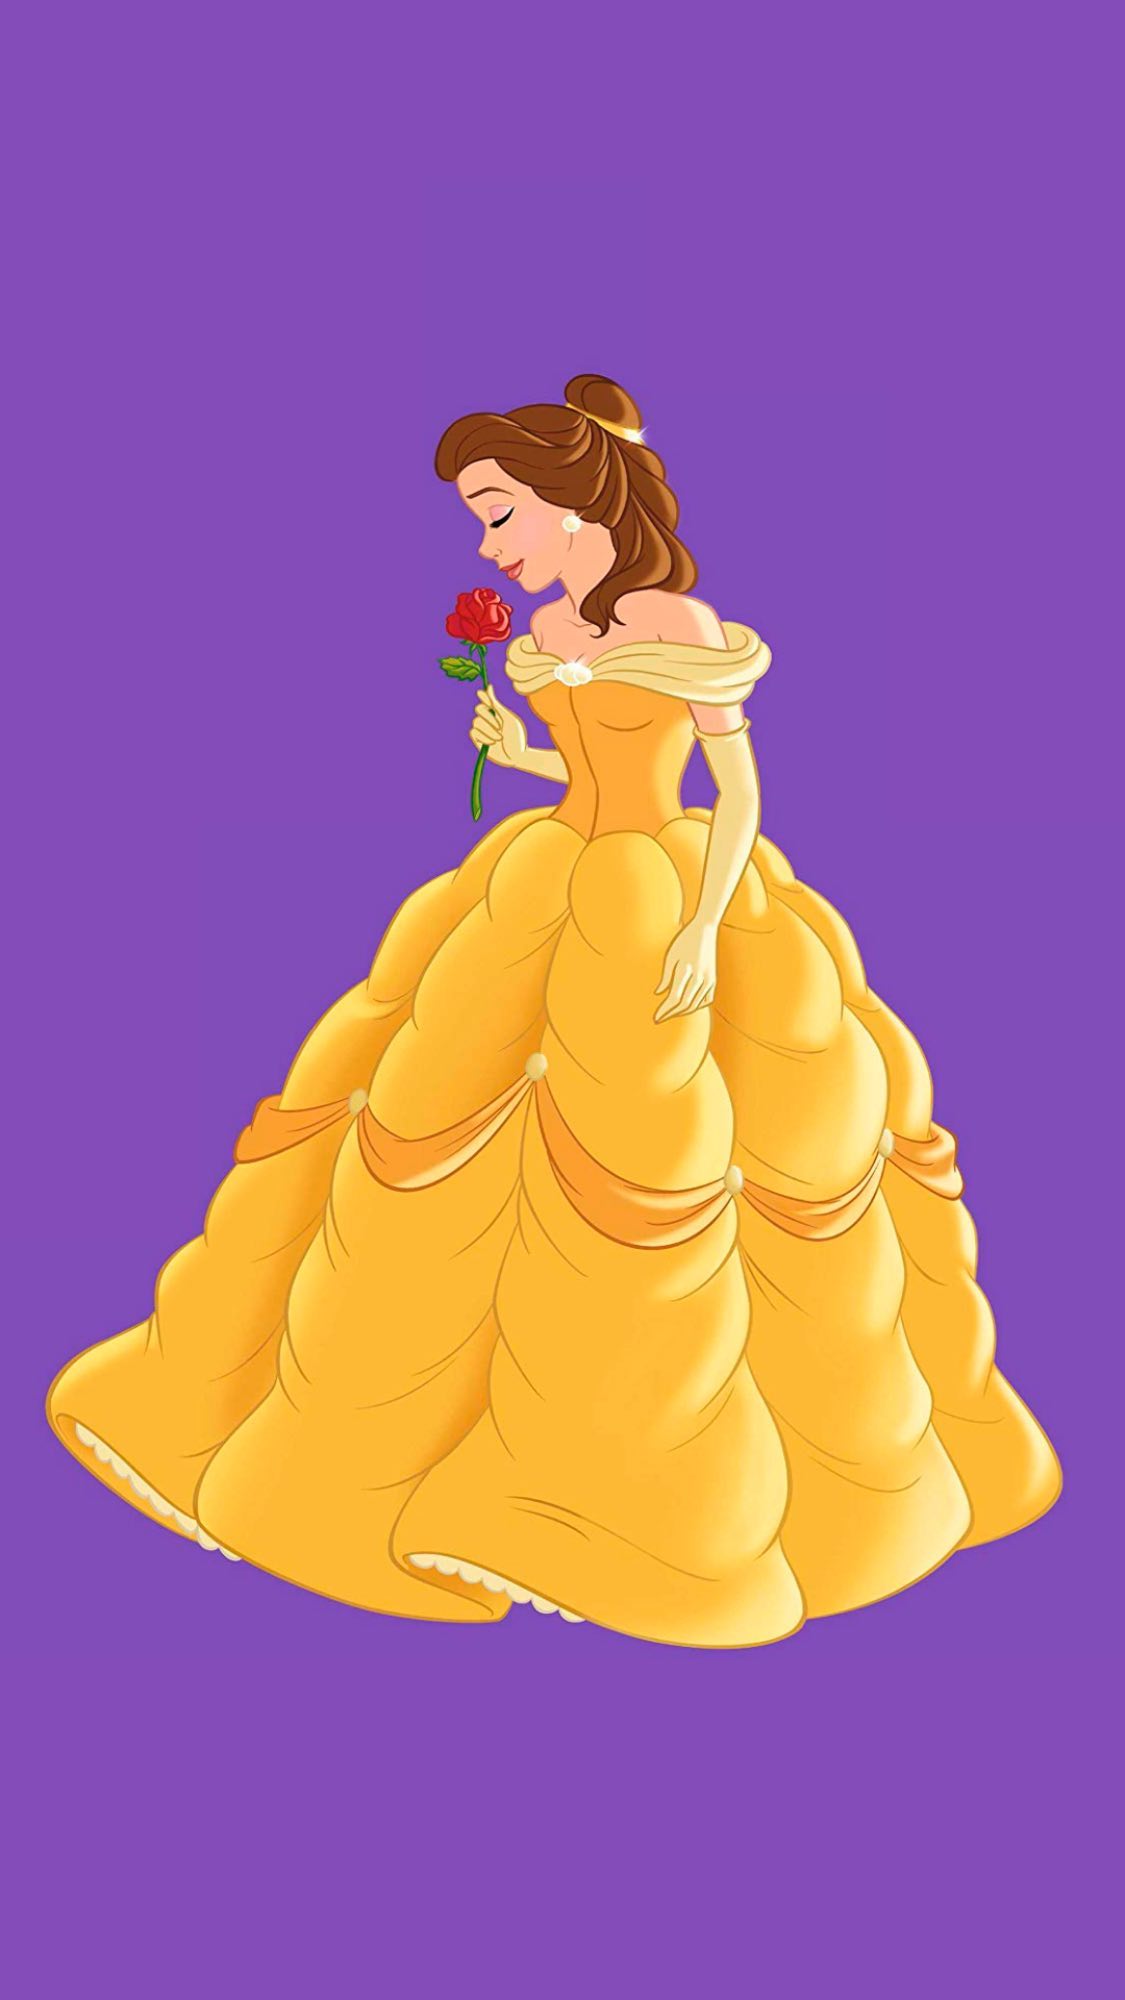 Disney Princess mobile wallpaper collection